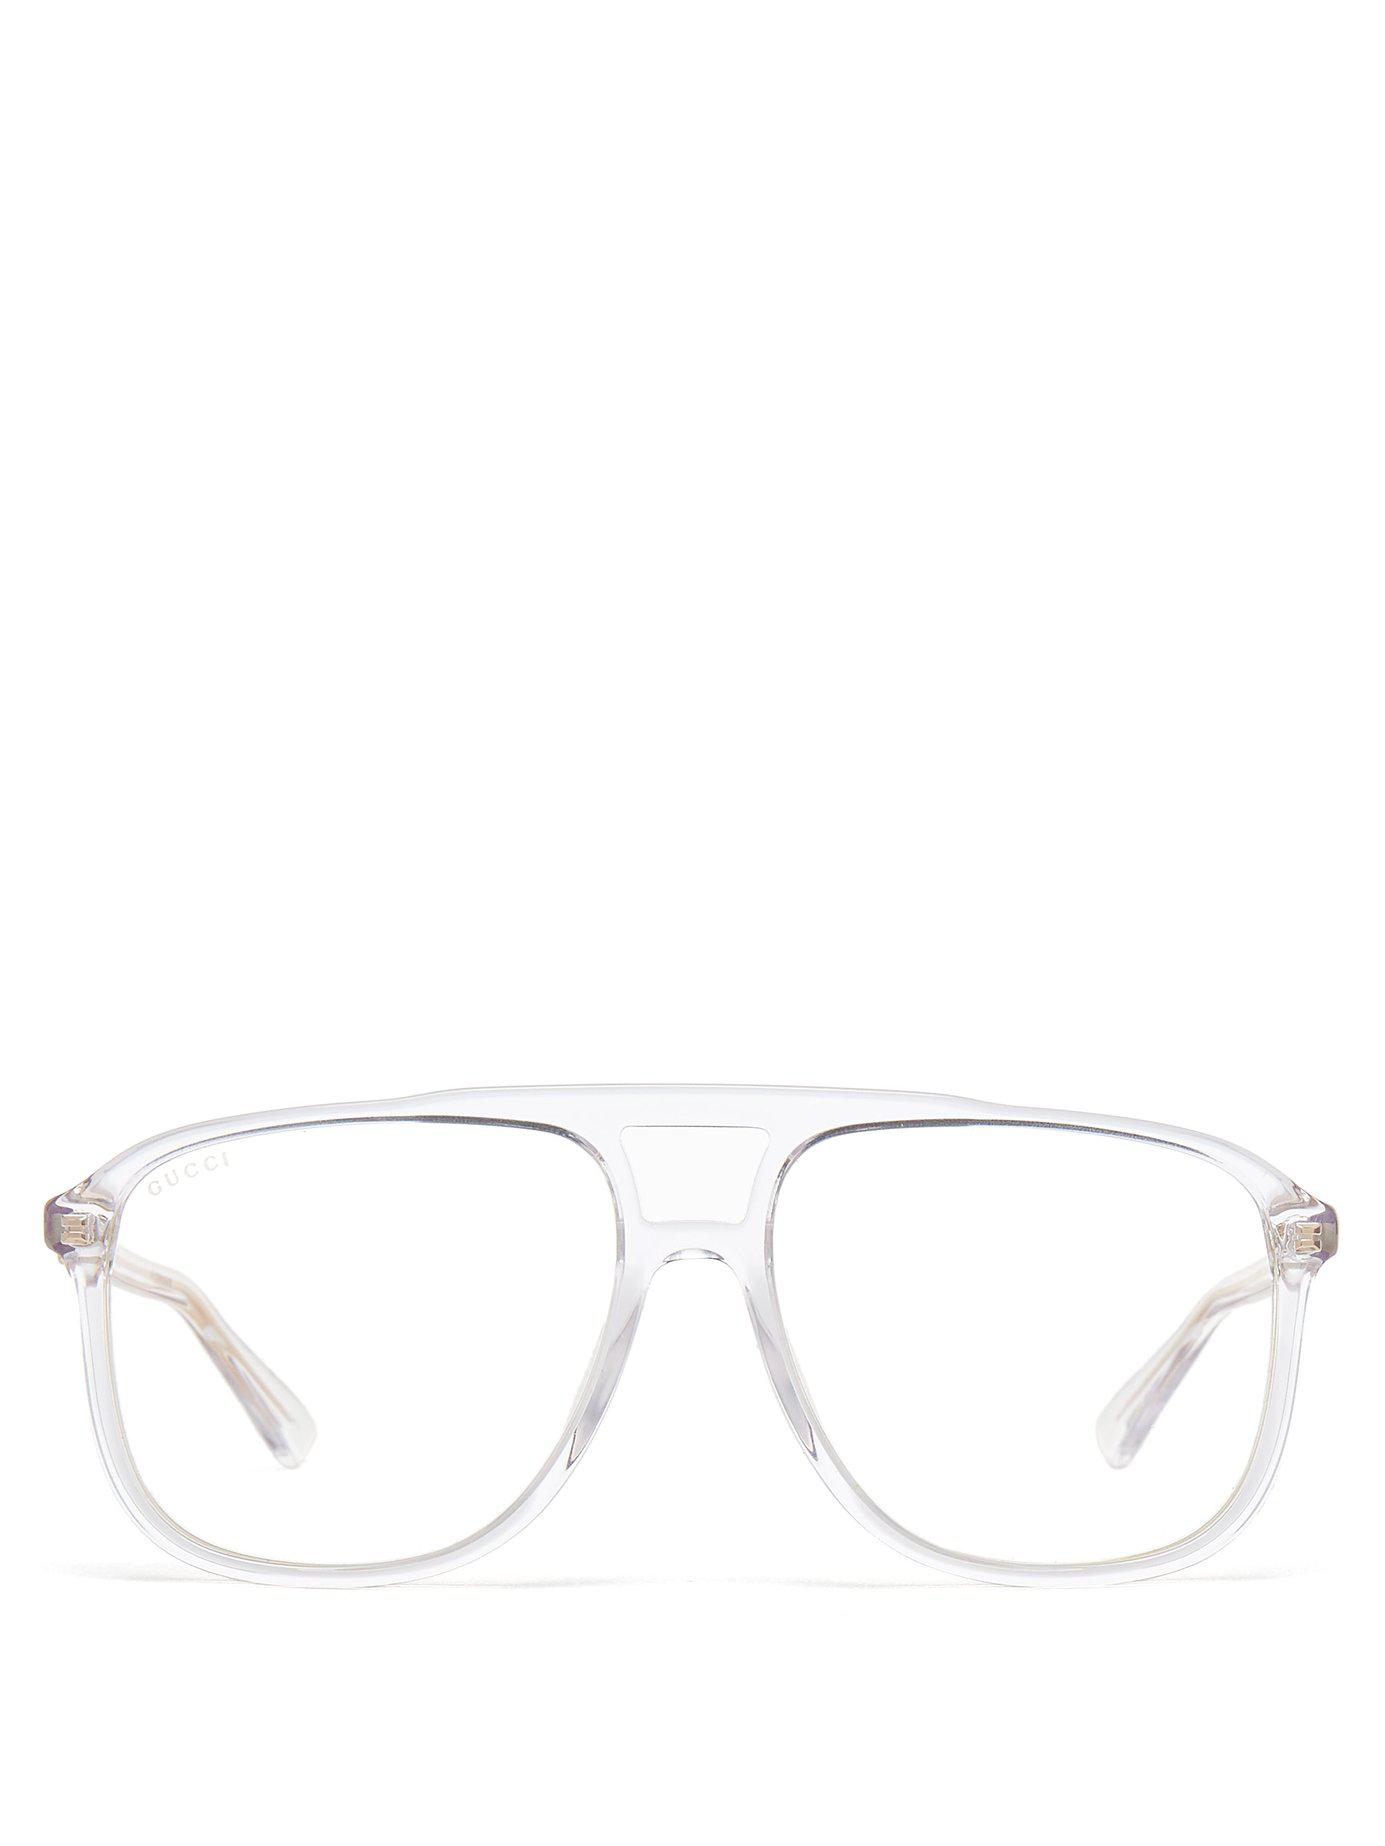 Gucci Squared-aviator Acetate Optical Glasses for Men - Lyst